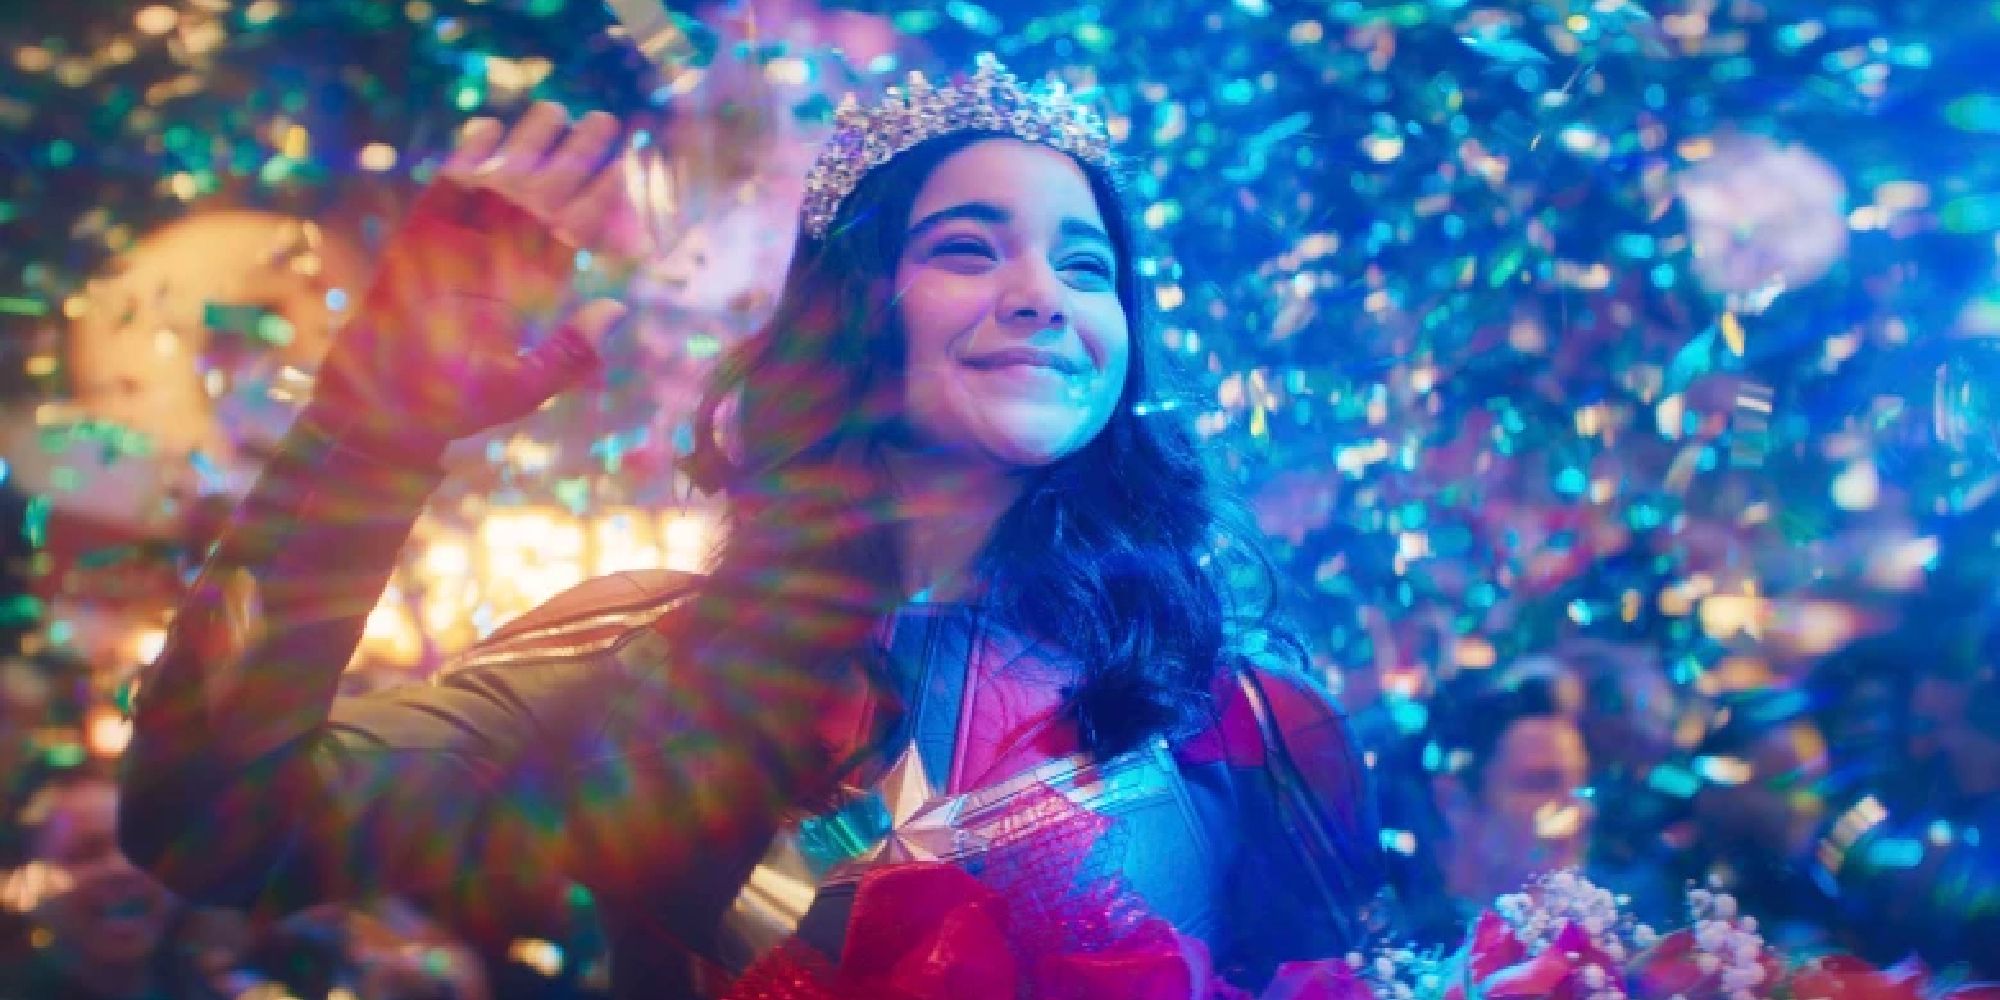 Kamala Khan winning the Captain Marvel cosplay contest in her fantasy